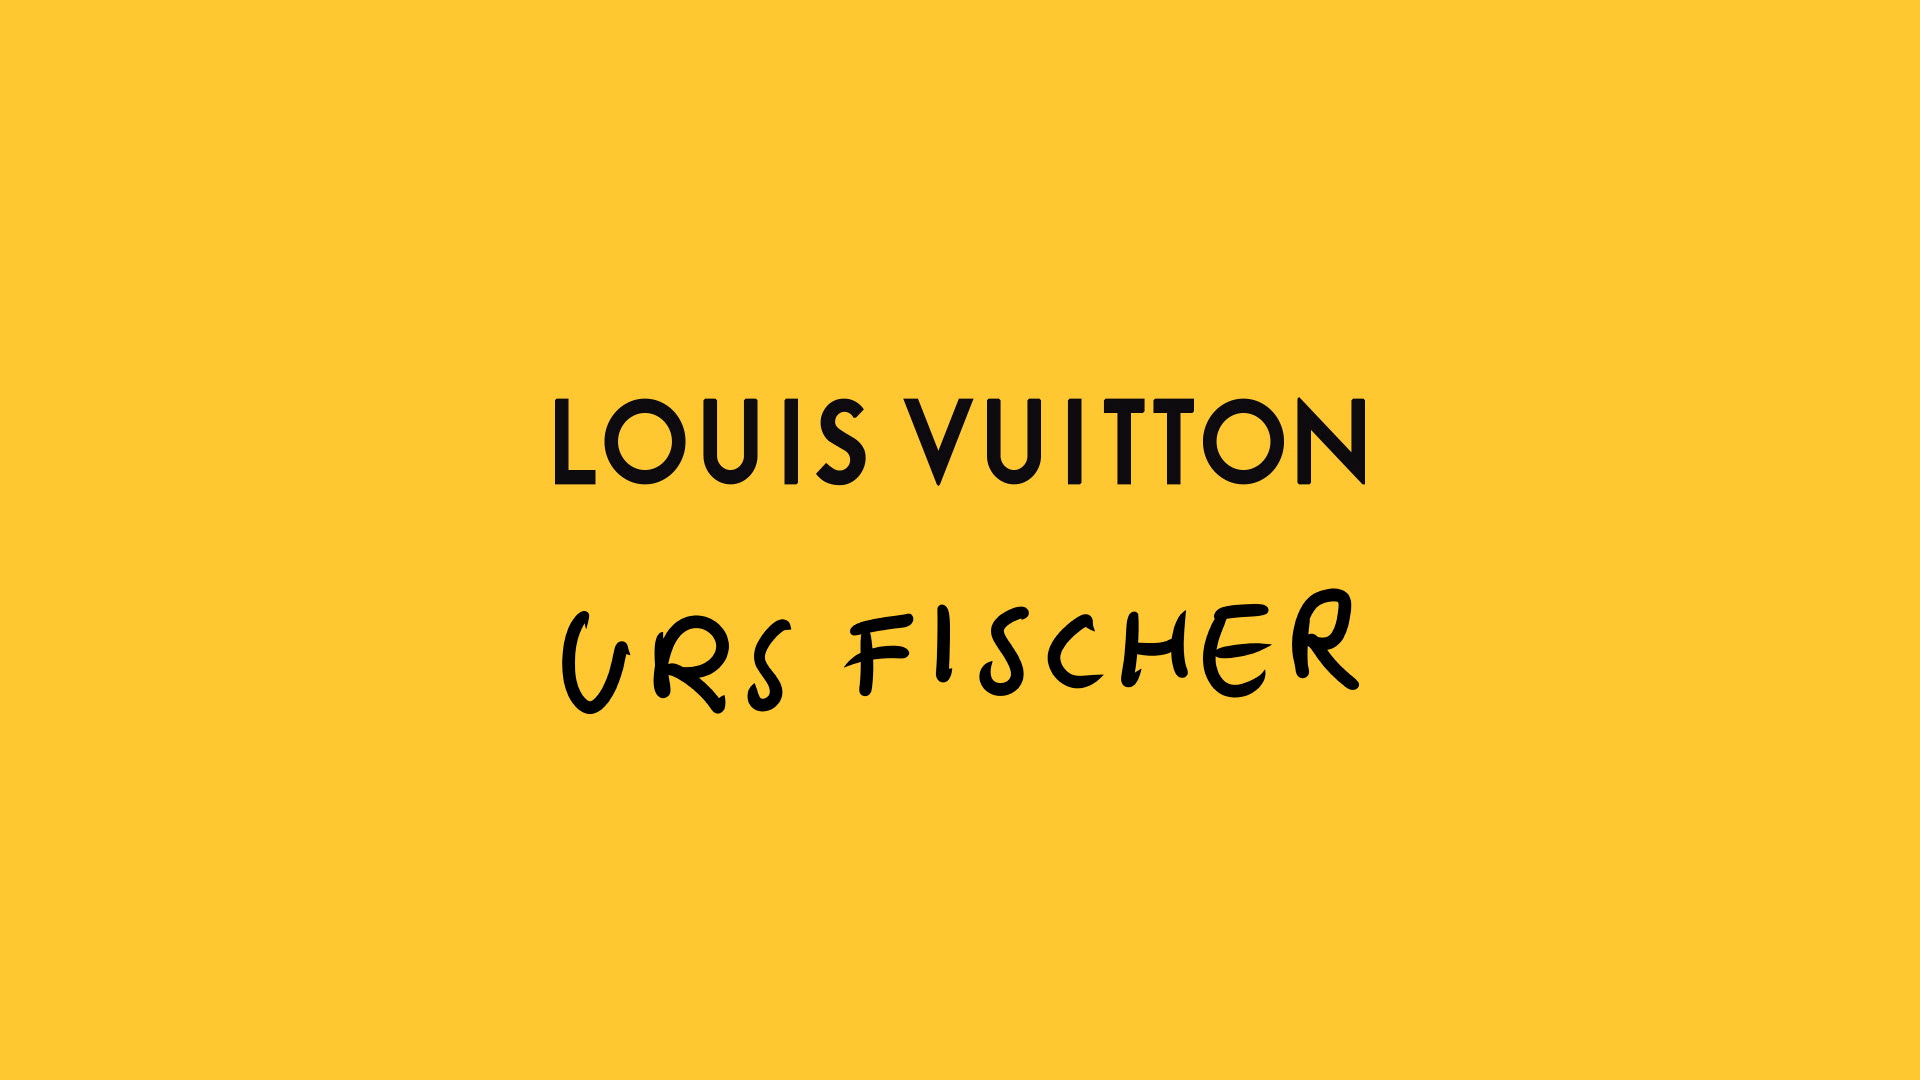 Louis Vuitton x Urs Fischer Collaboration